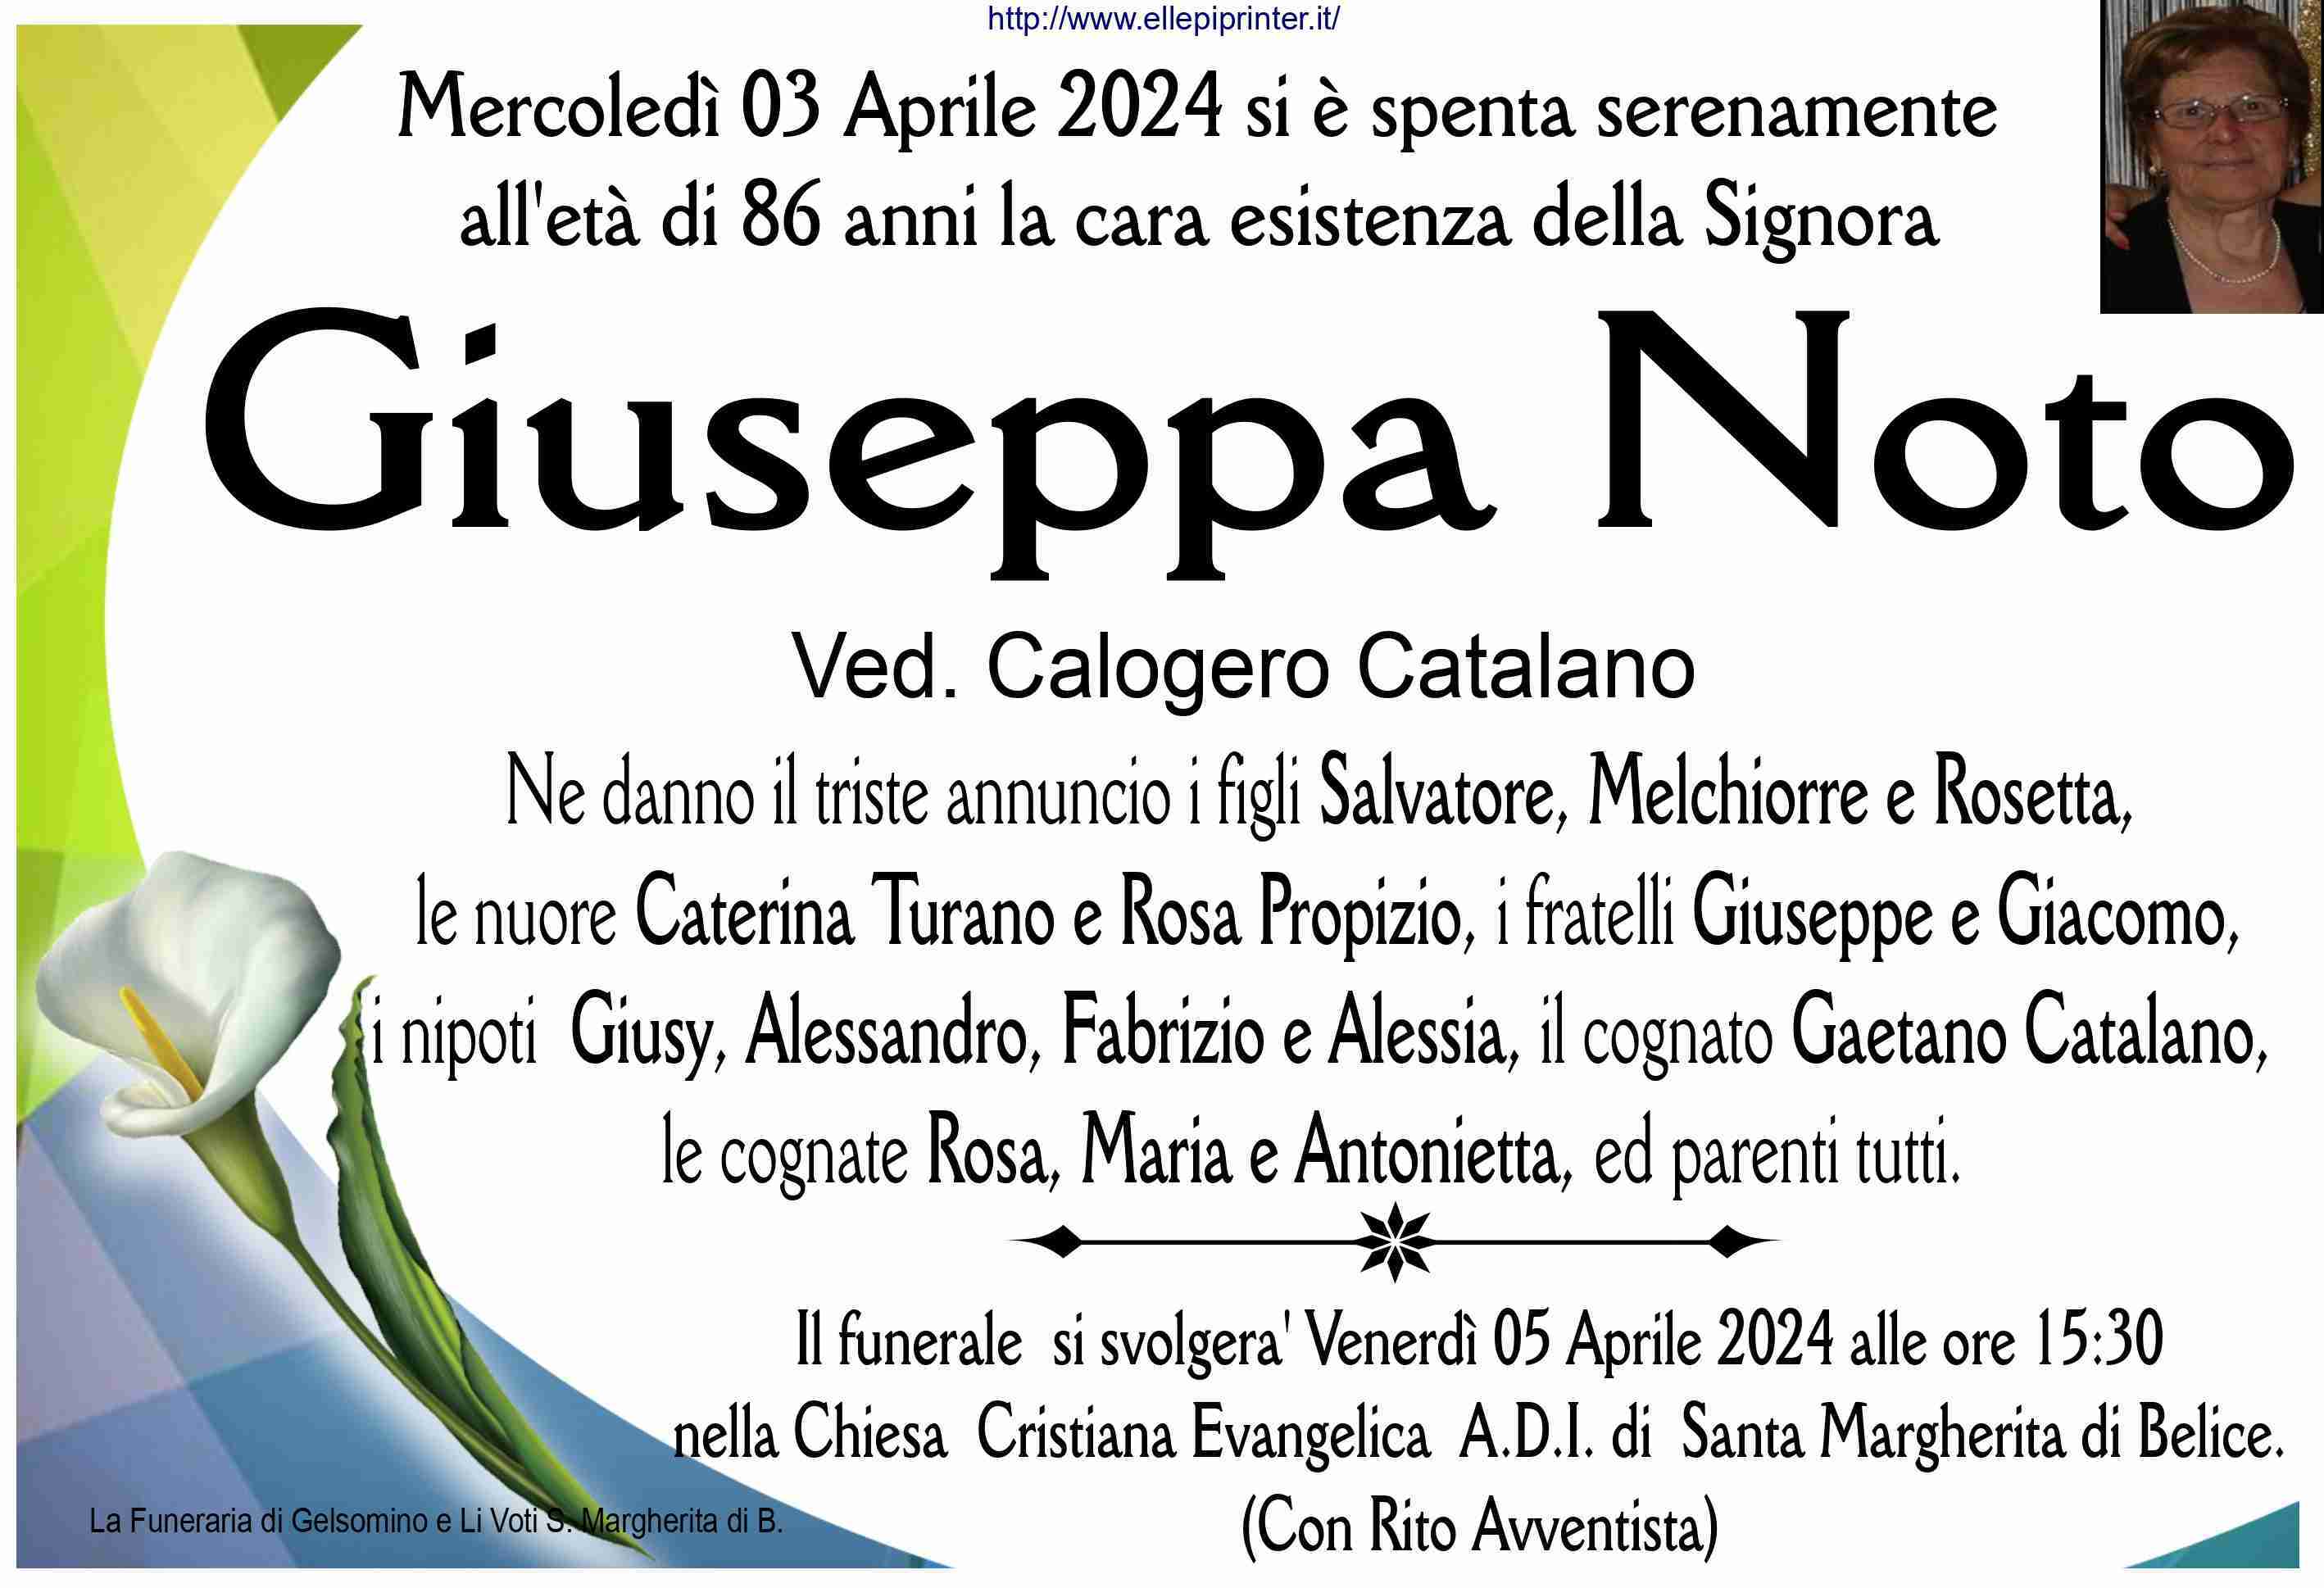 Giuseppa Noto